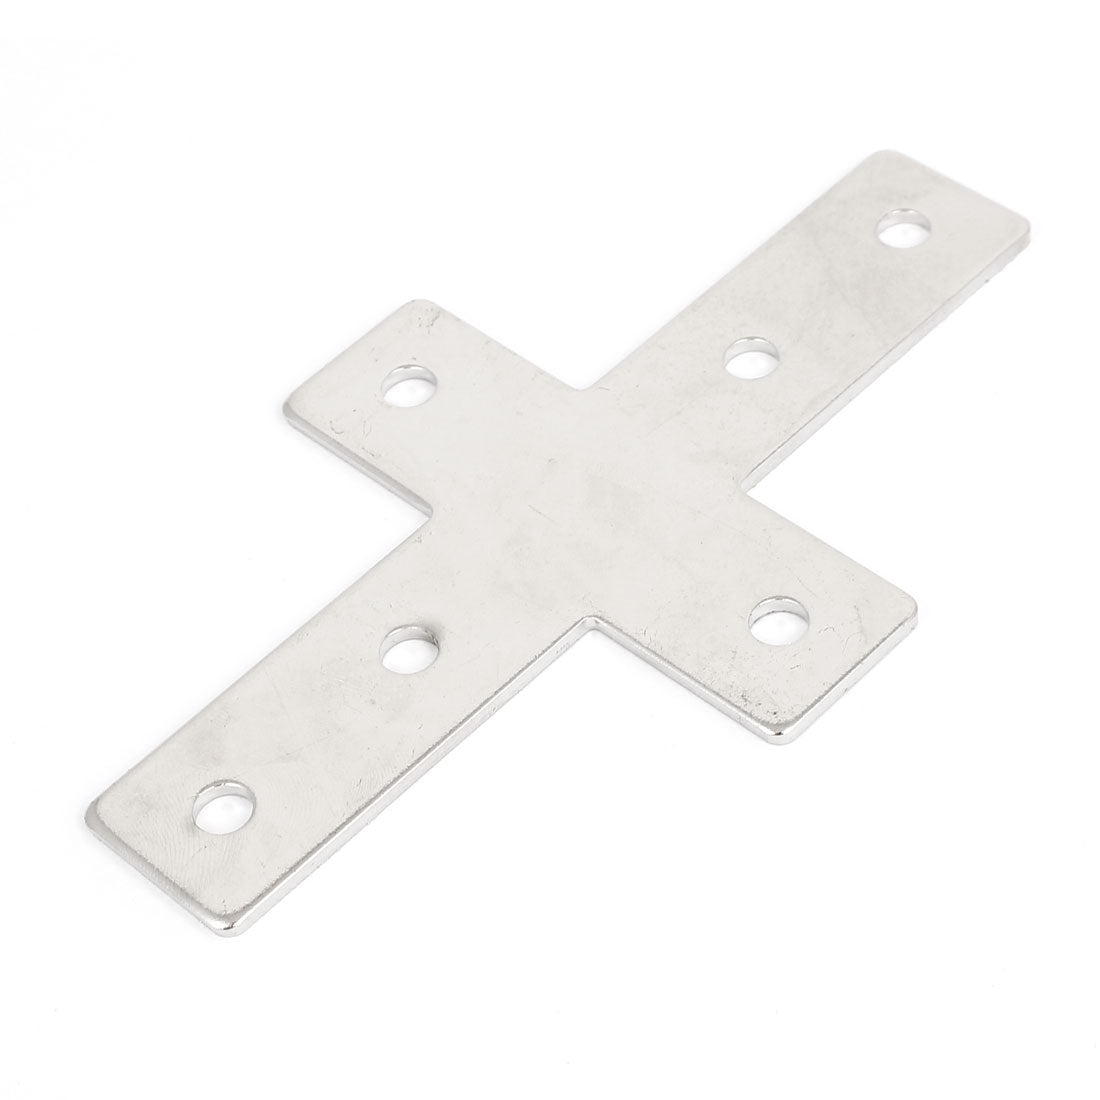 uxcell Uxcell 145mmx85mm Cross Shaped Metal Flat Plate Corner Brace Angle Bracket Support Holder